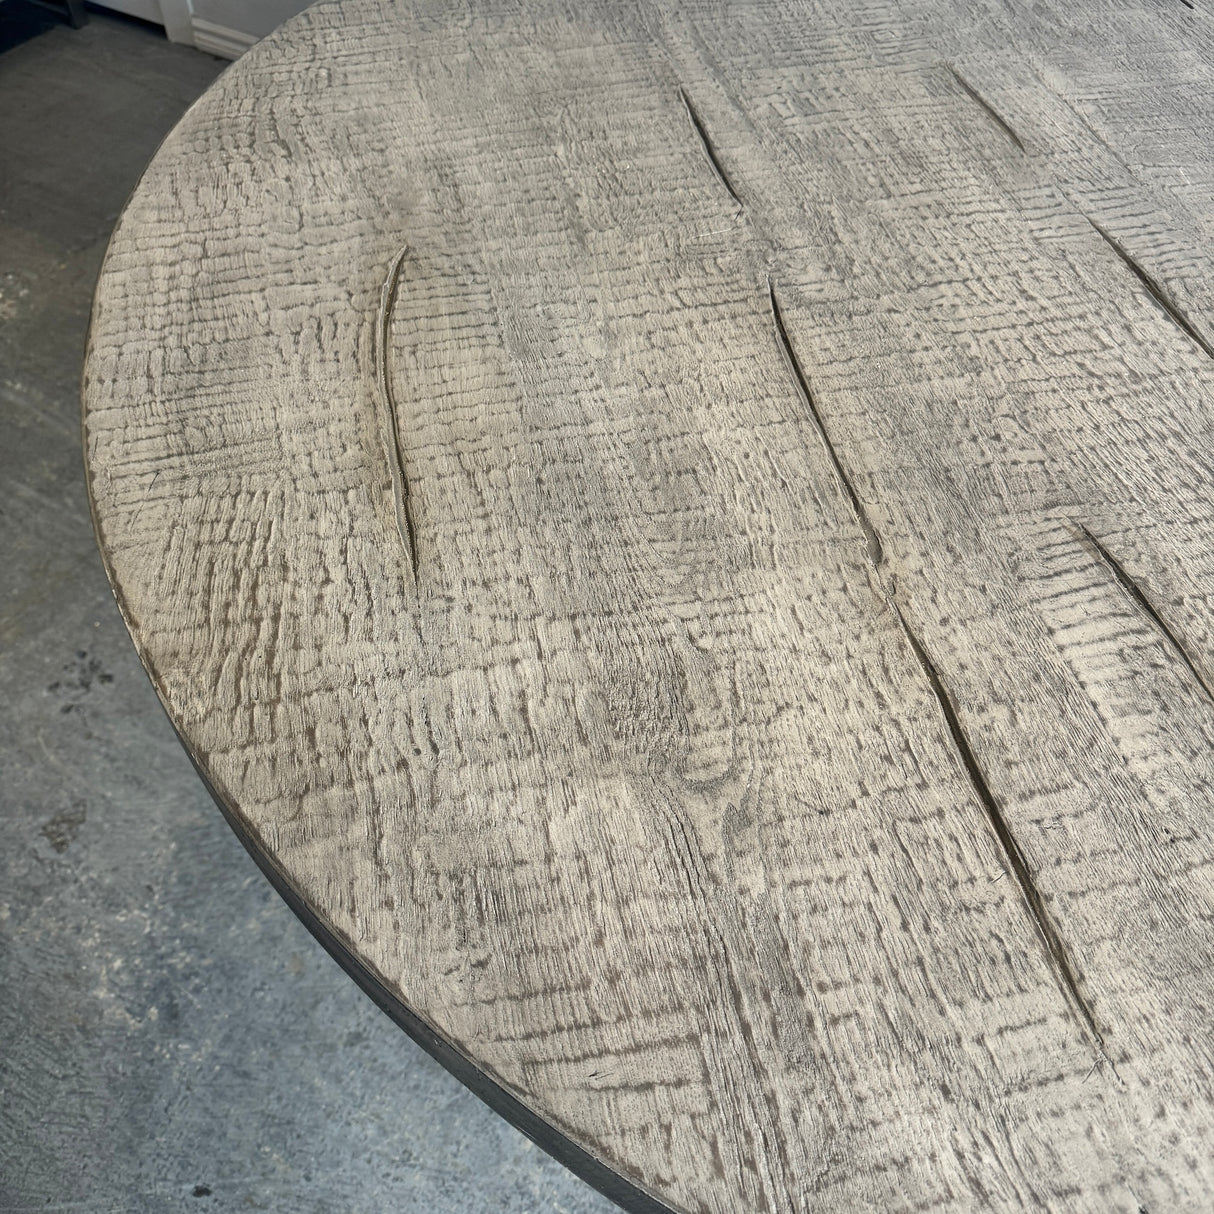 Restoration Hardware Reclaimed Oak Plank round Dining Table